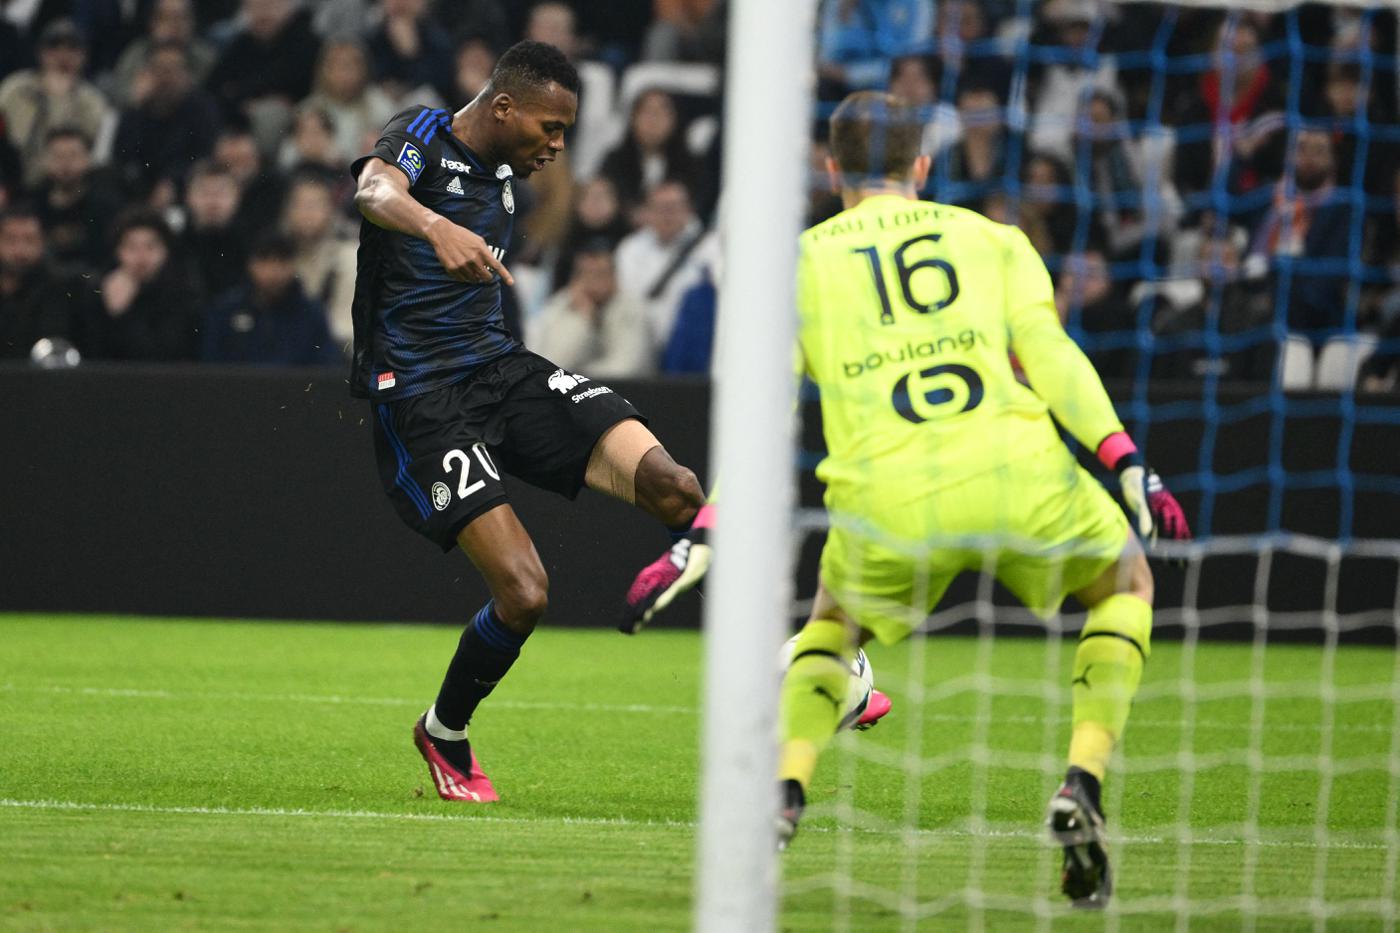 Marseille - Strasbourg - 2:2. French Premier League, round 27. Match review, statistics.